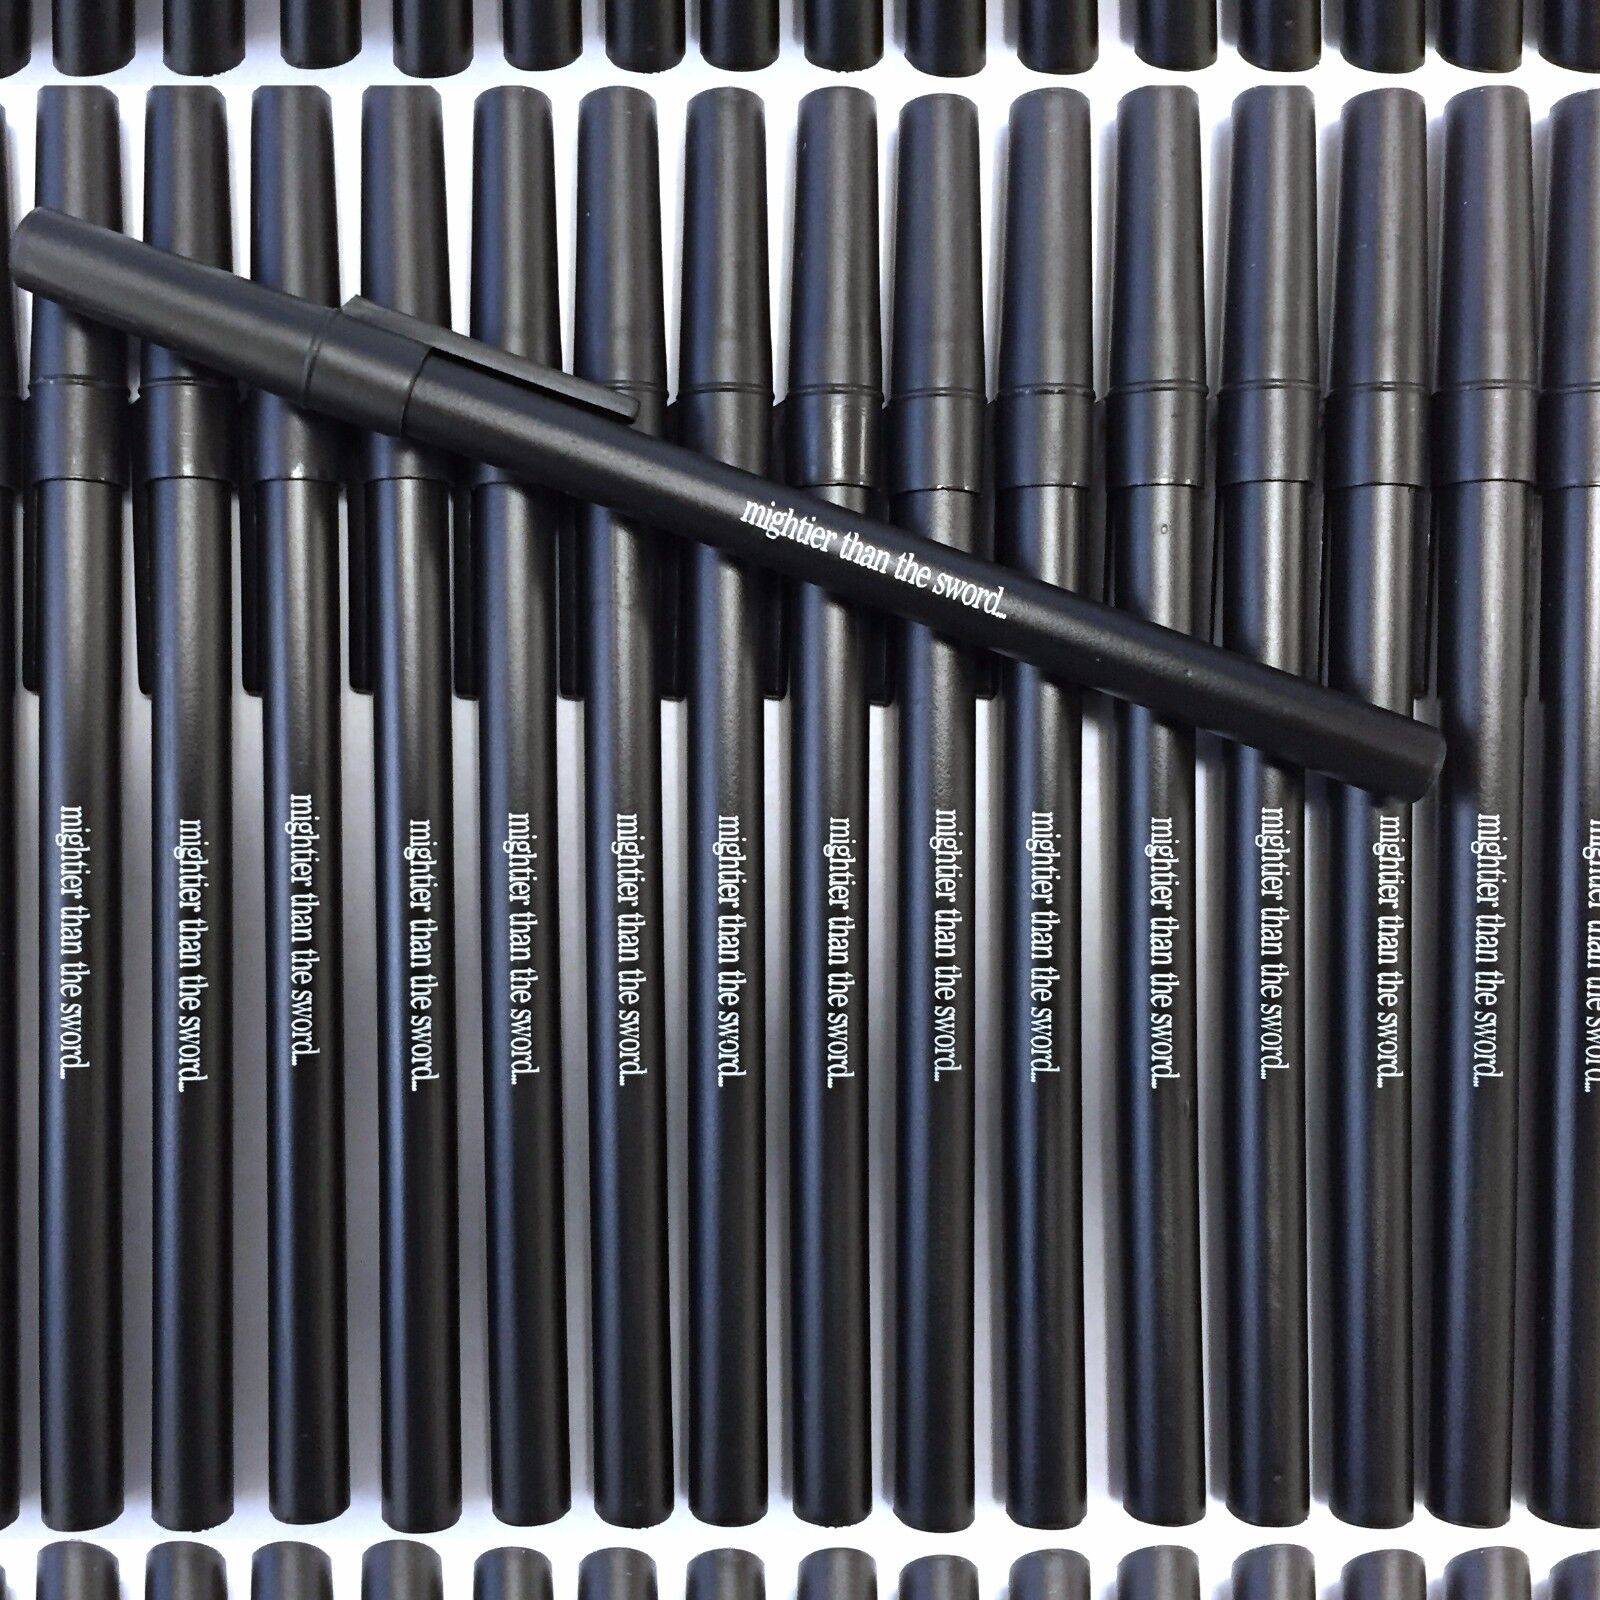 Misprint Pens 1000 Ball Point Ink Wholesale Lot Bic Round Stic Style Black Cap